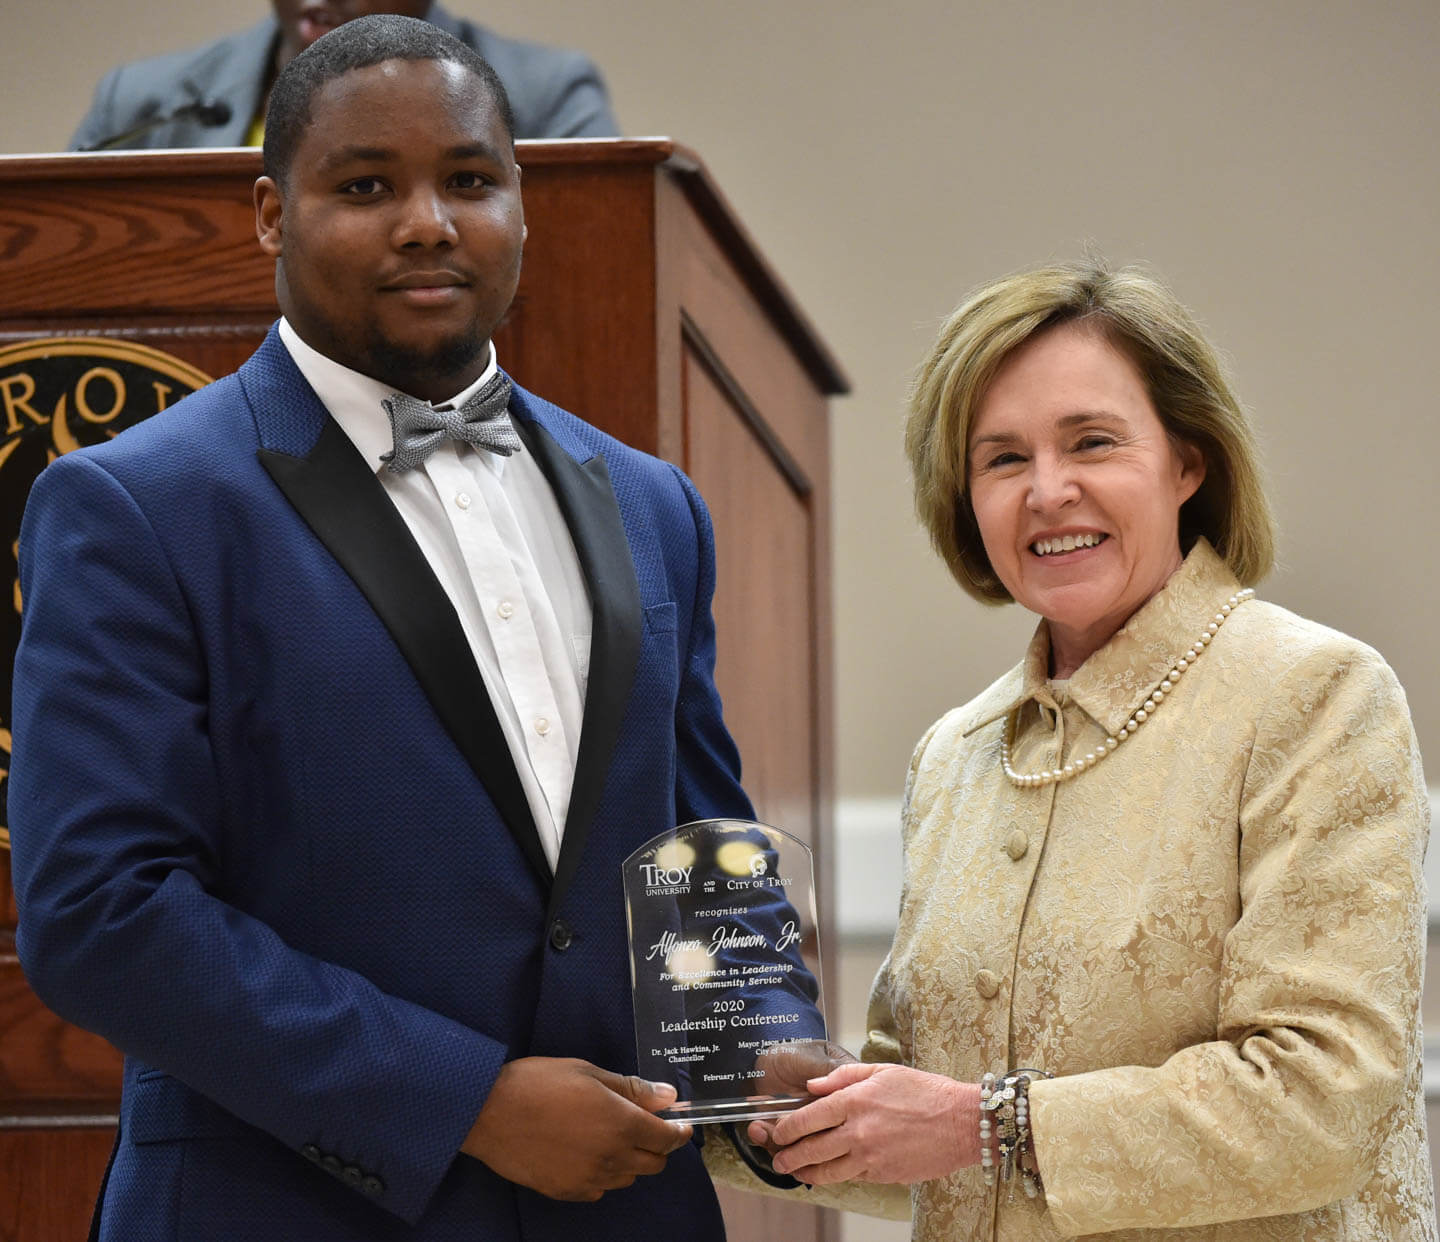 Herman Johnson, Jr. receiving student award from Barbara Patterson